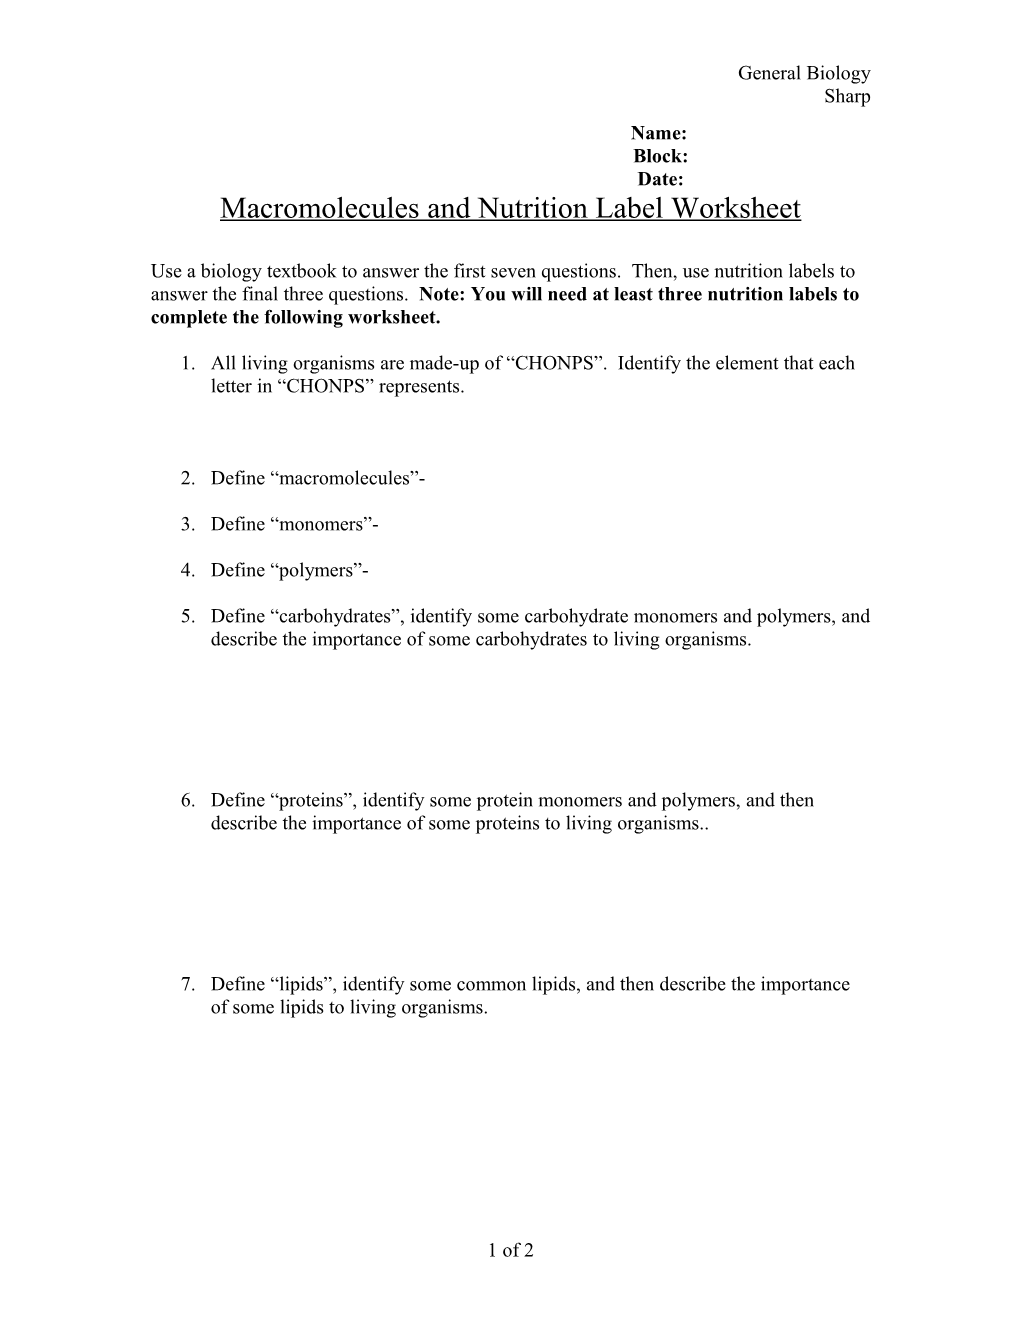 Macromolecules and Nutrition Label Worksheet